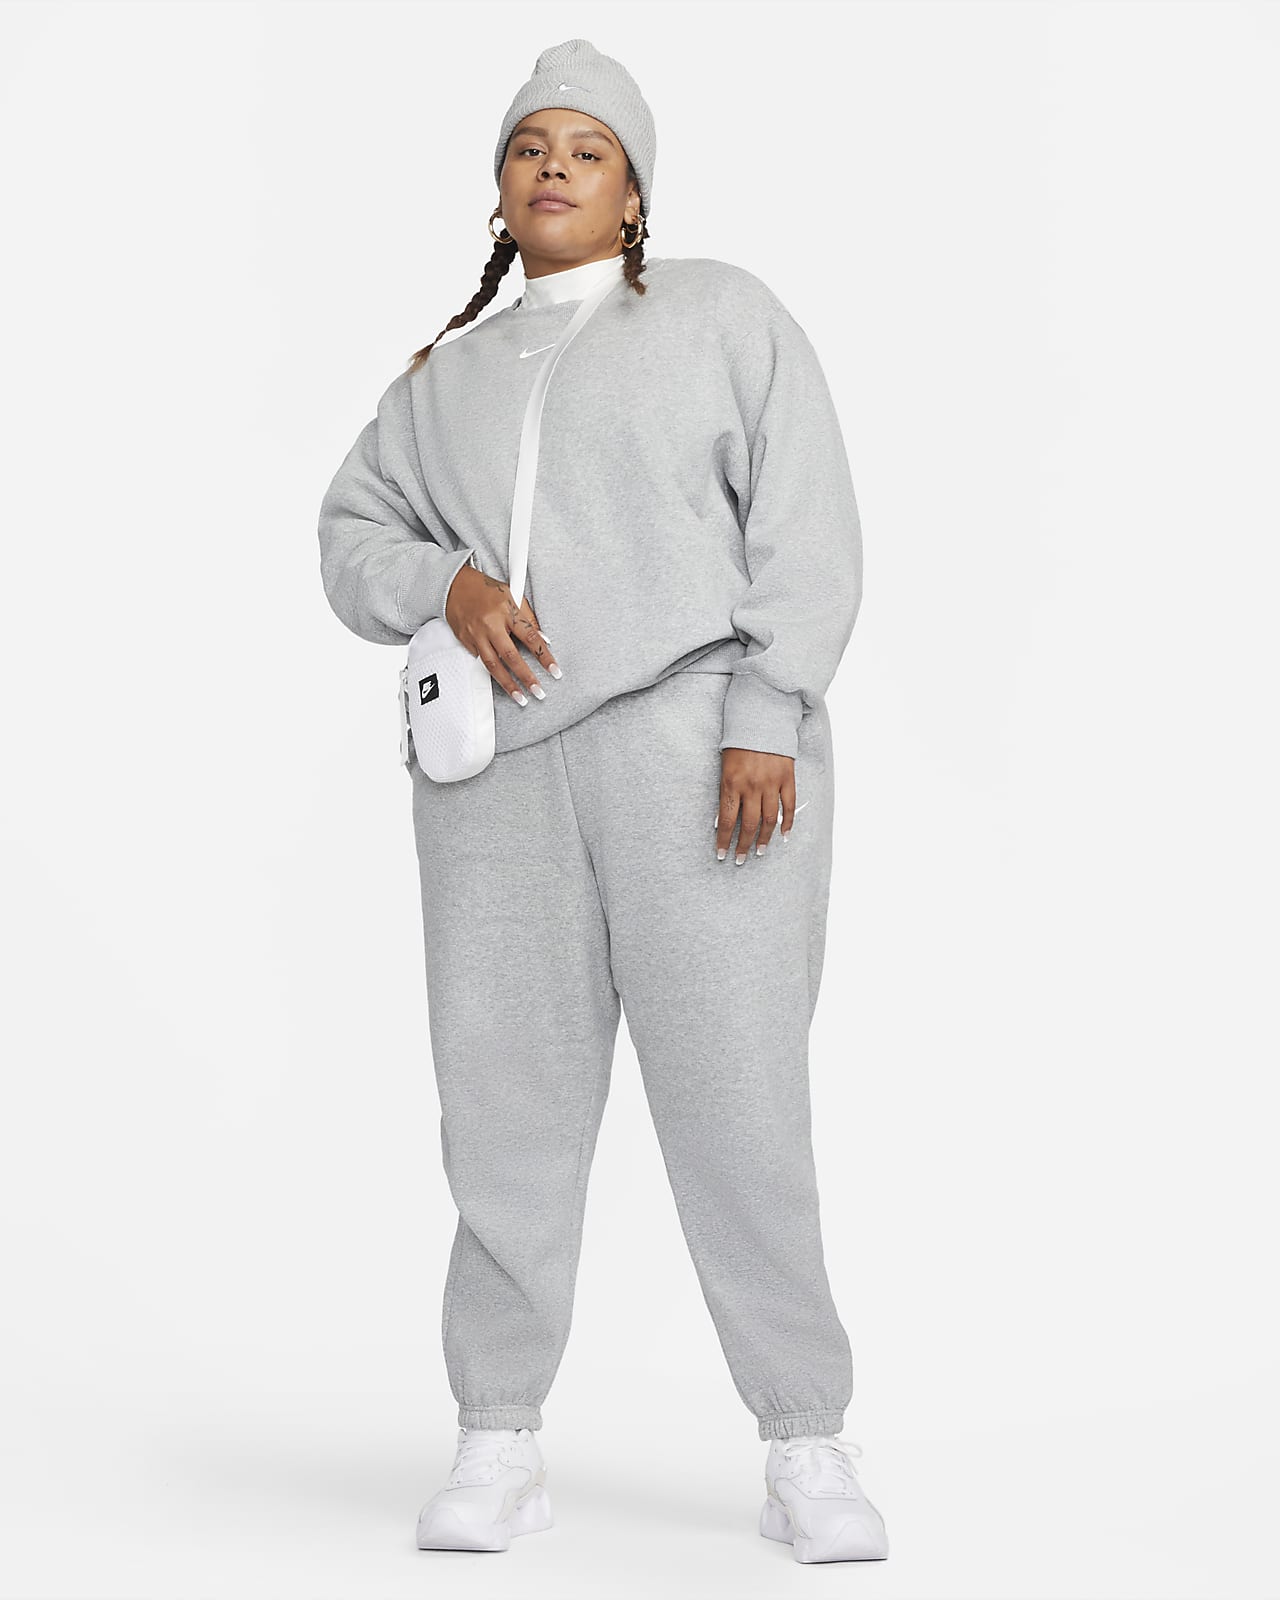 Nike WMNS Phoenix Fleece High-Waisted Oversized Sweatpants Grey - DK GREY  HEATHER/SAIL